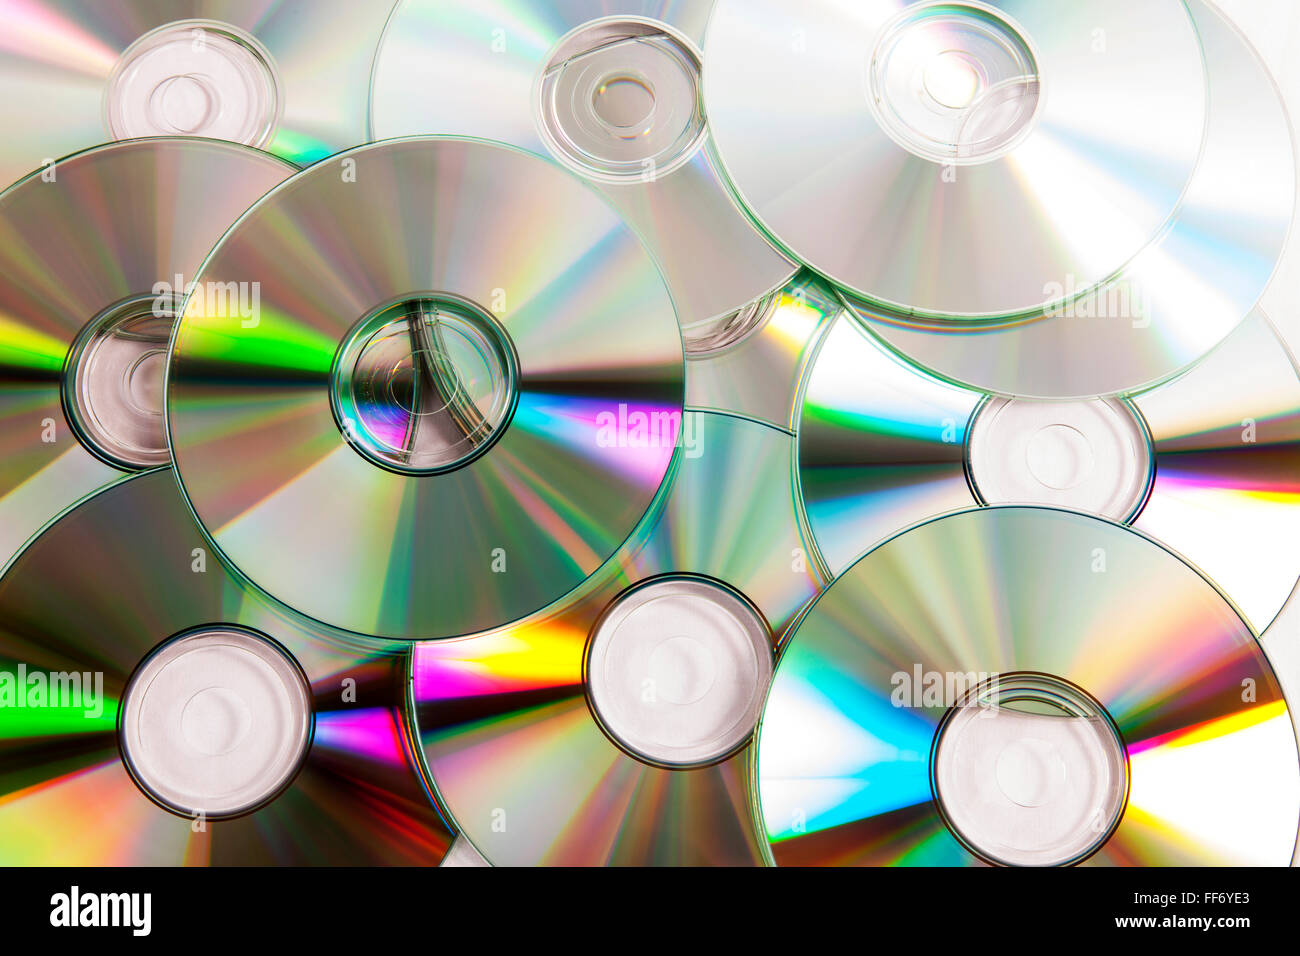 Cds dvds cd dvd discos de almacenamiento de datos digital la piratería disc  full frame music studio de amontonar grabar información óptica de película  Fotografía de stock - Alamy